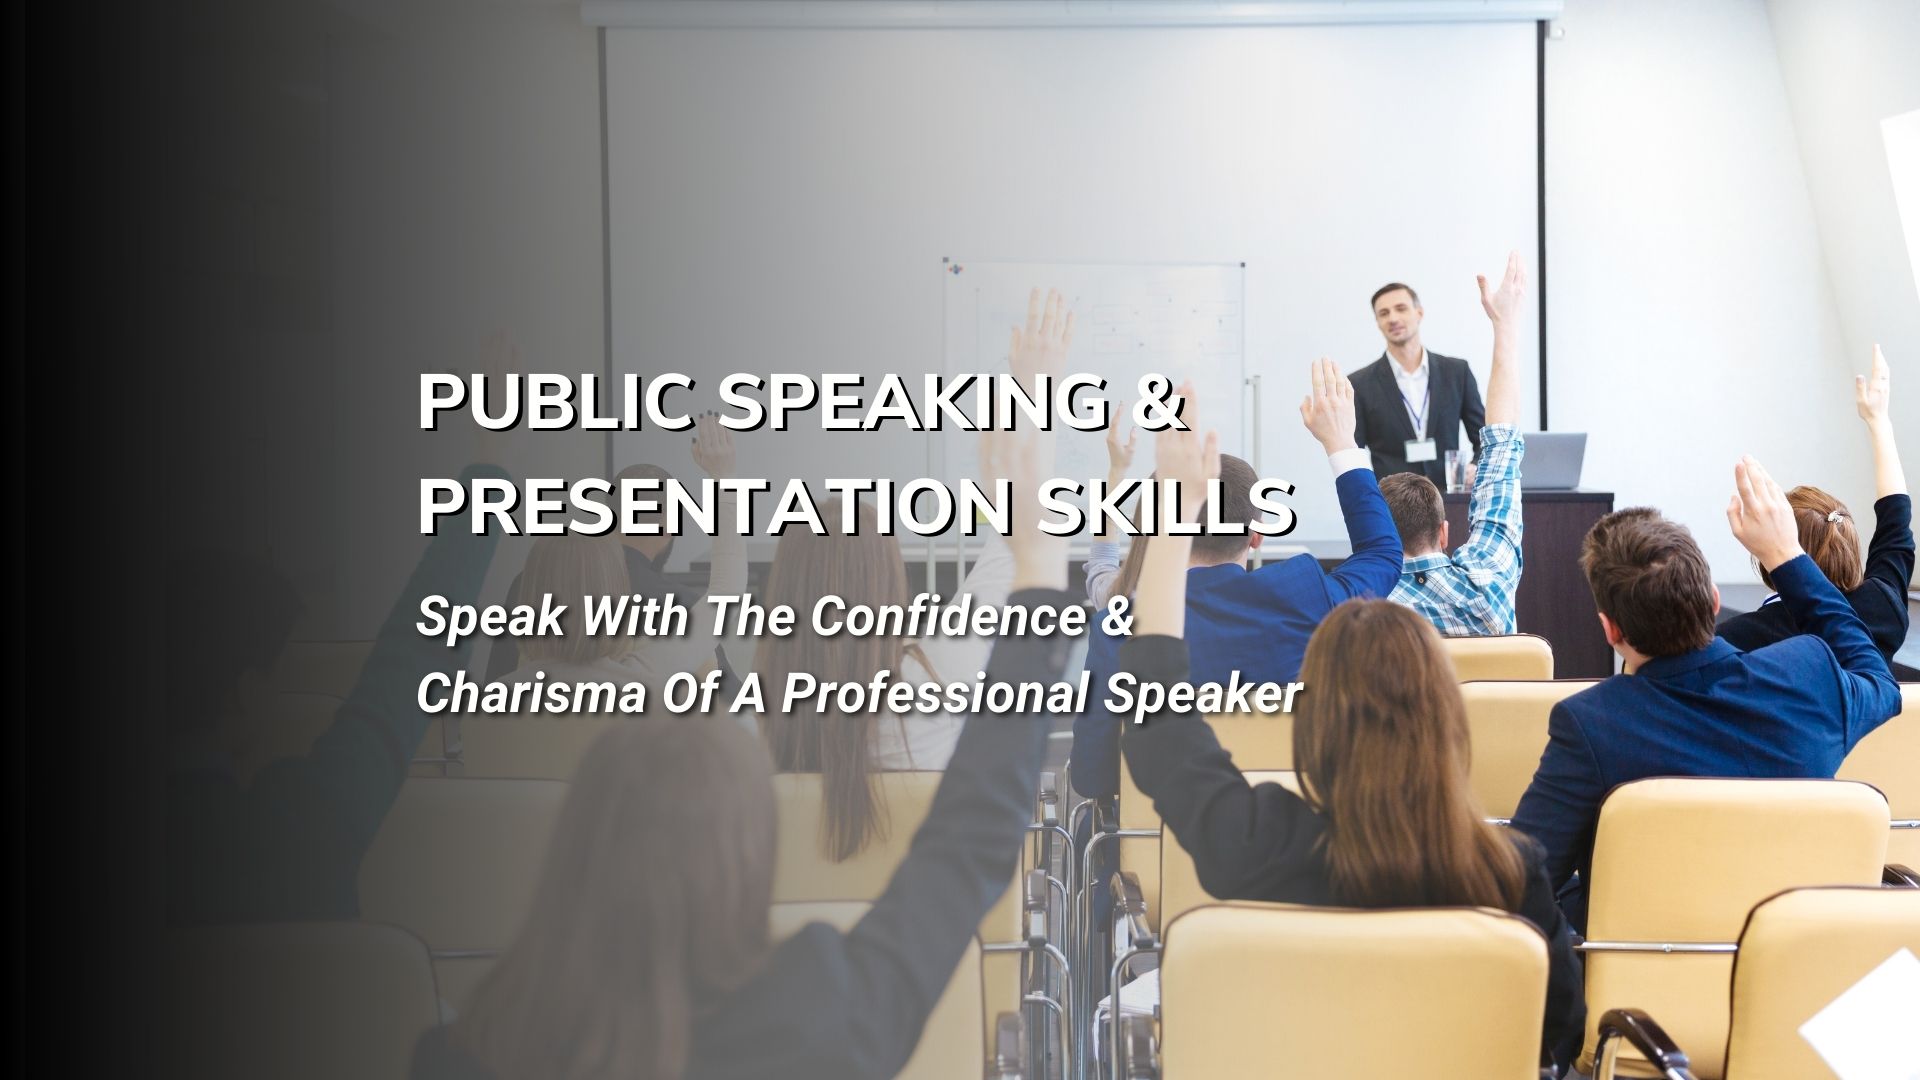 Public Speaking & Presentation Skills - Live Online Class, Online Event